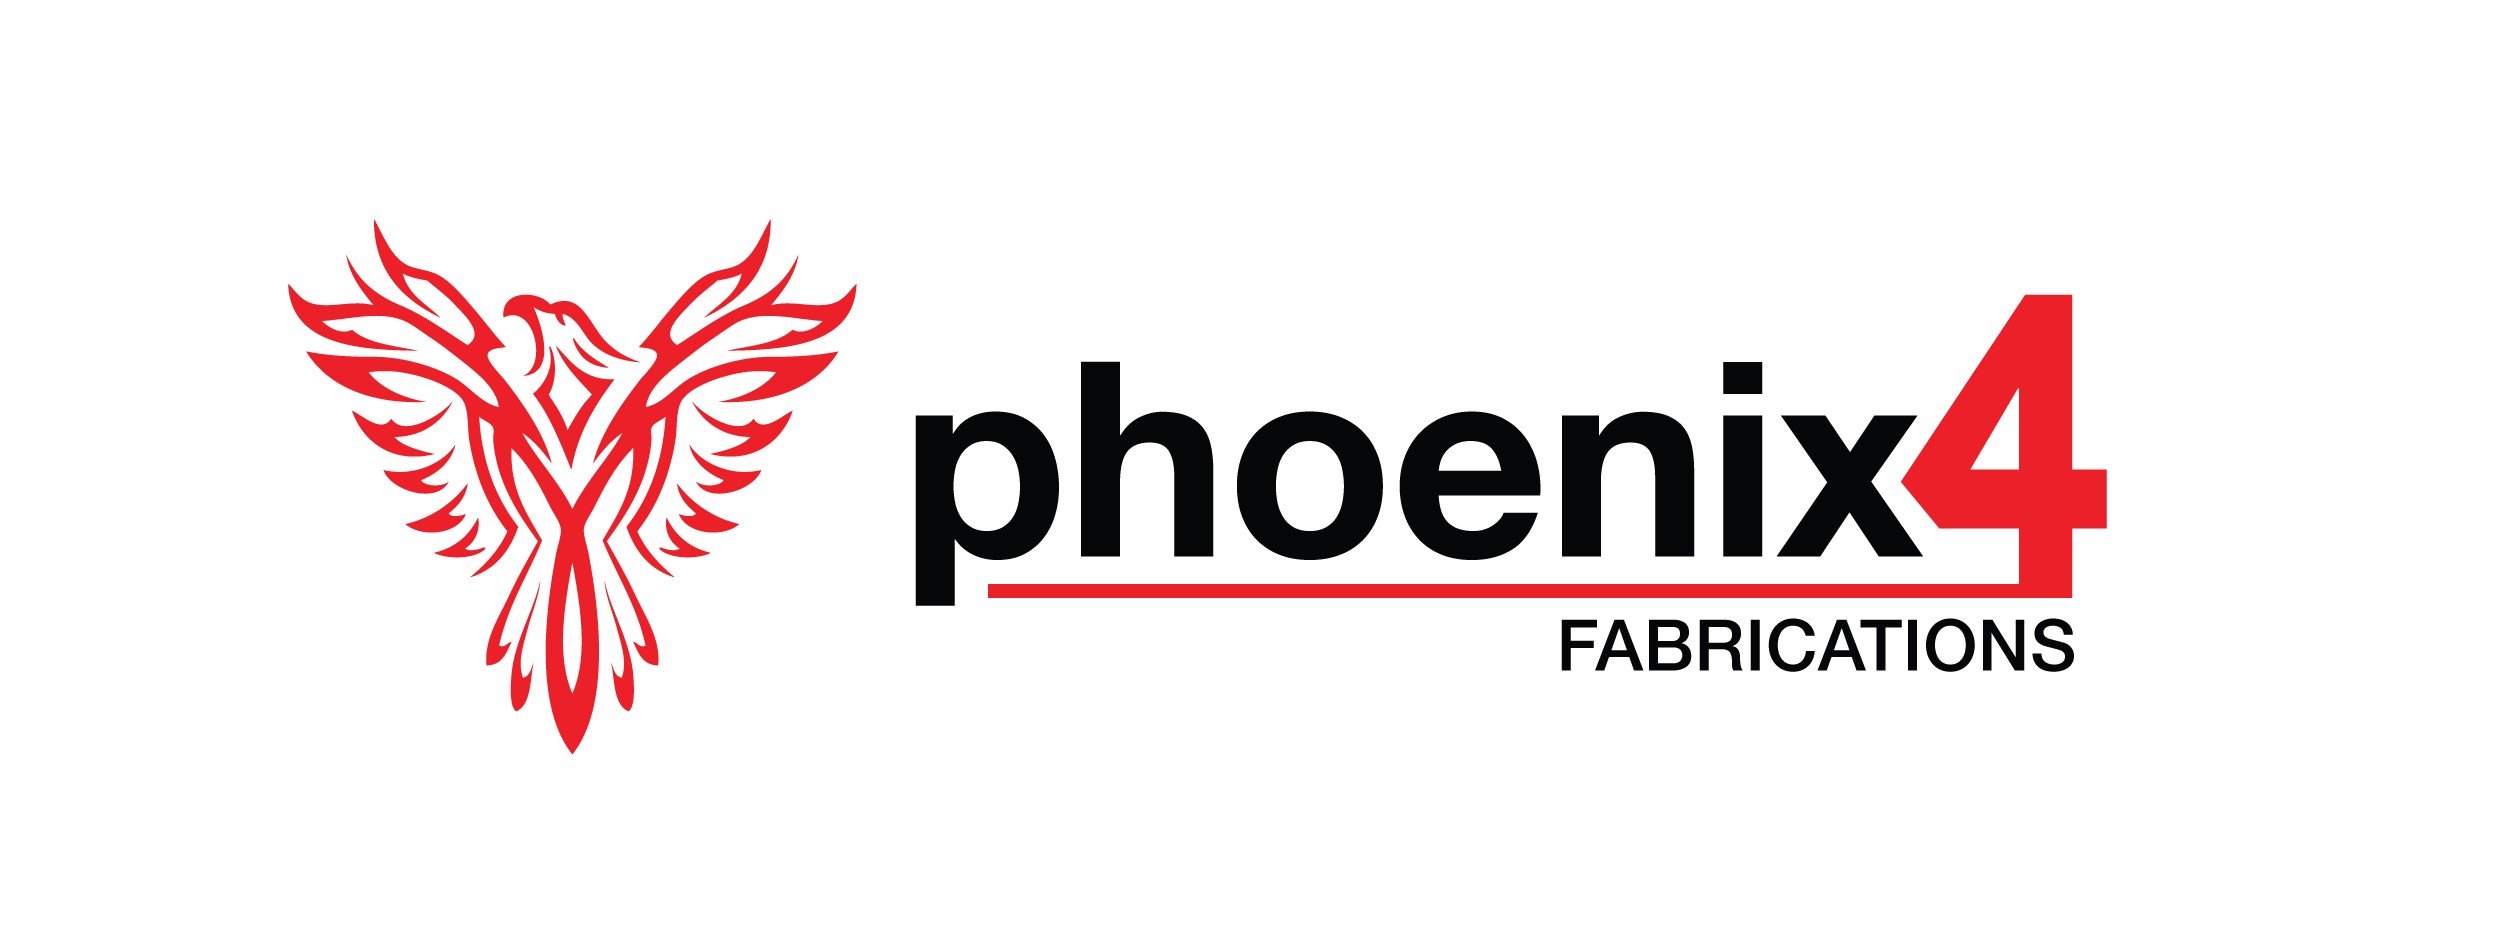 Phoenix 4 Fabrications | LinkedIn